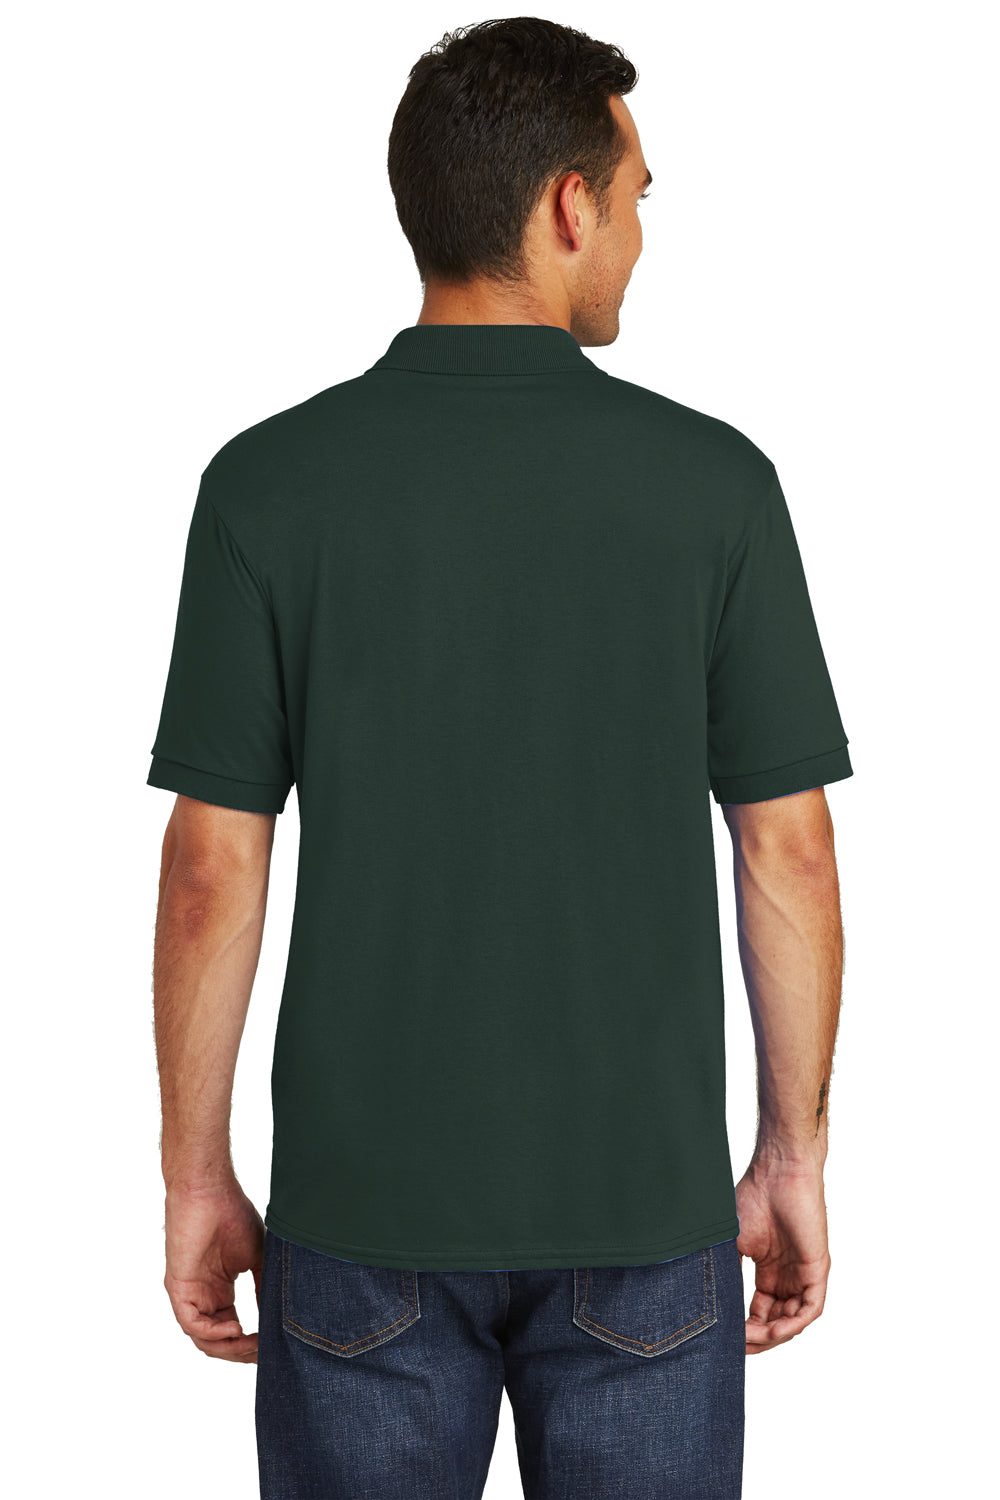 Port & Company KP55 Mens Core Stain Resistant Short Sleeve Polo Shirt Dark Green Back